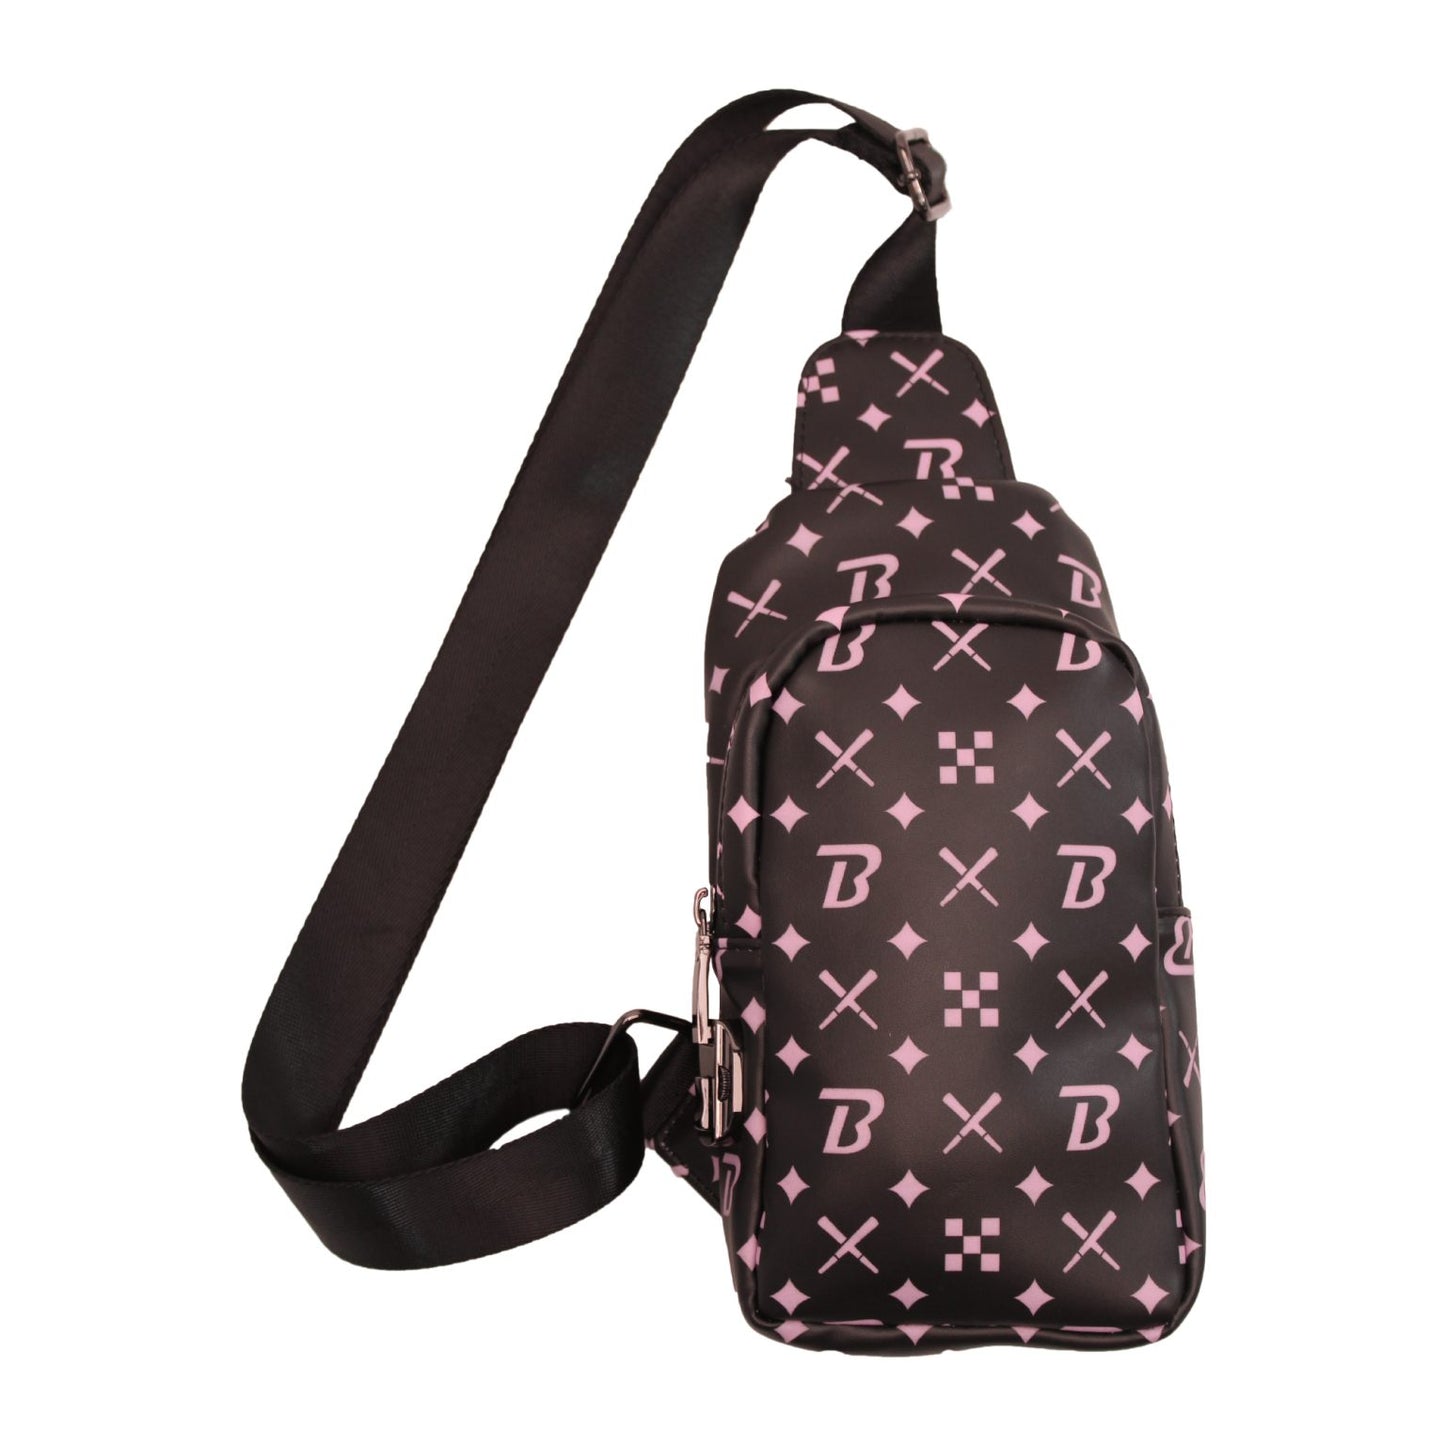 Blazy Susan Cross Body Bag | Smell Proof | Combo Lock